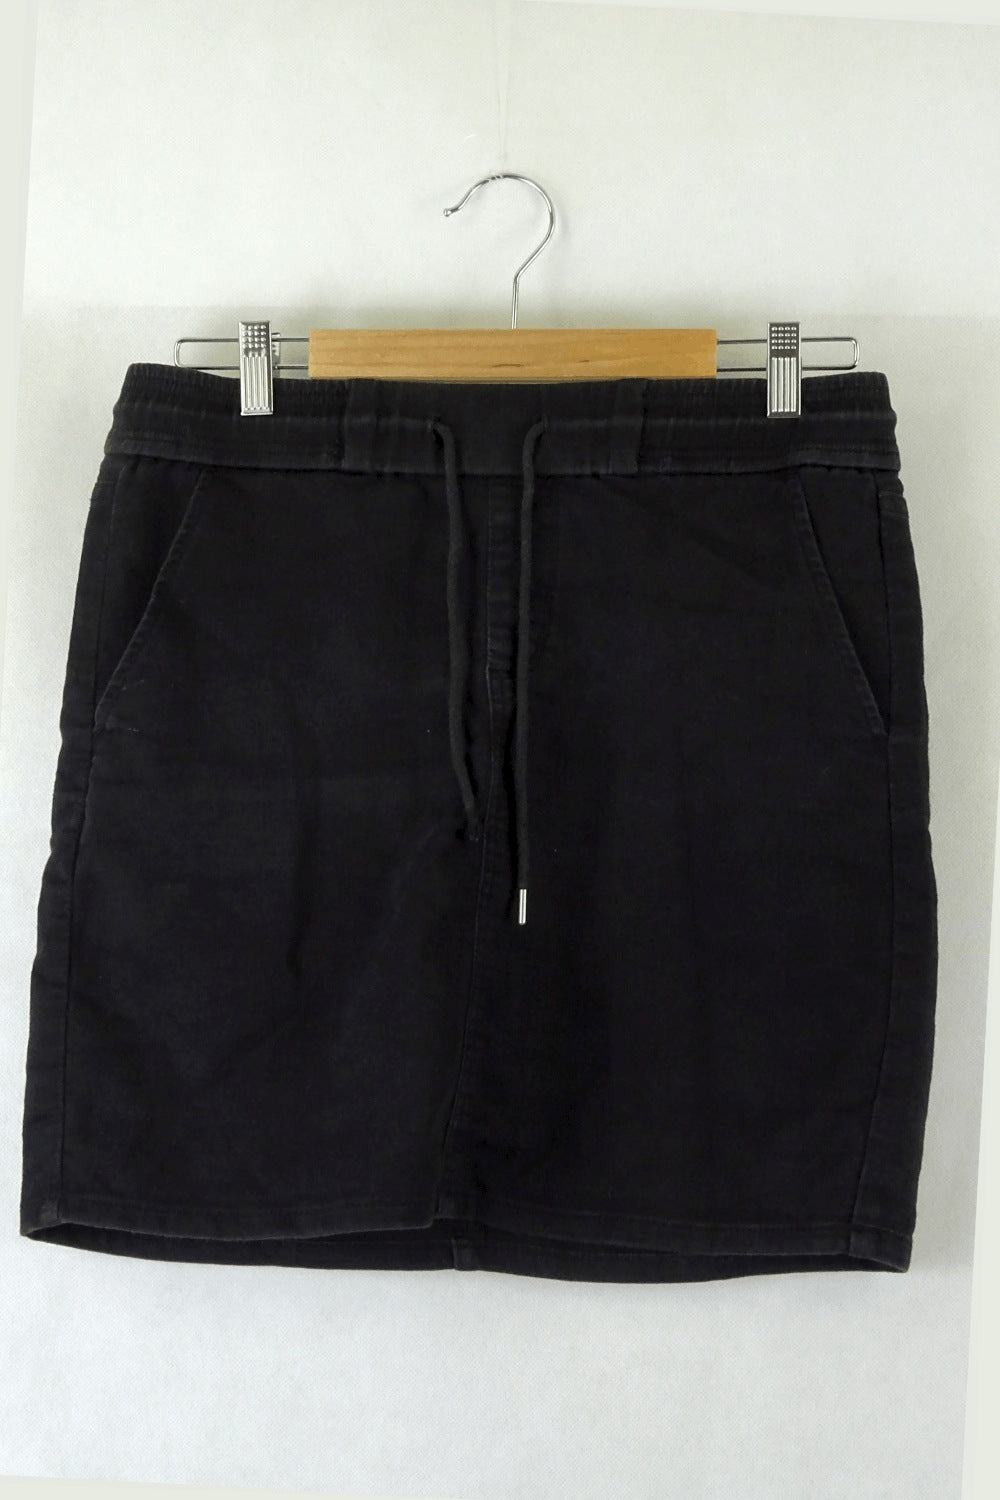 Jeanswest Black Skirt 10